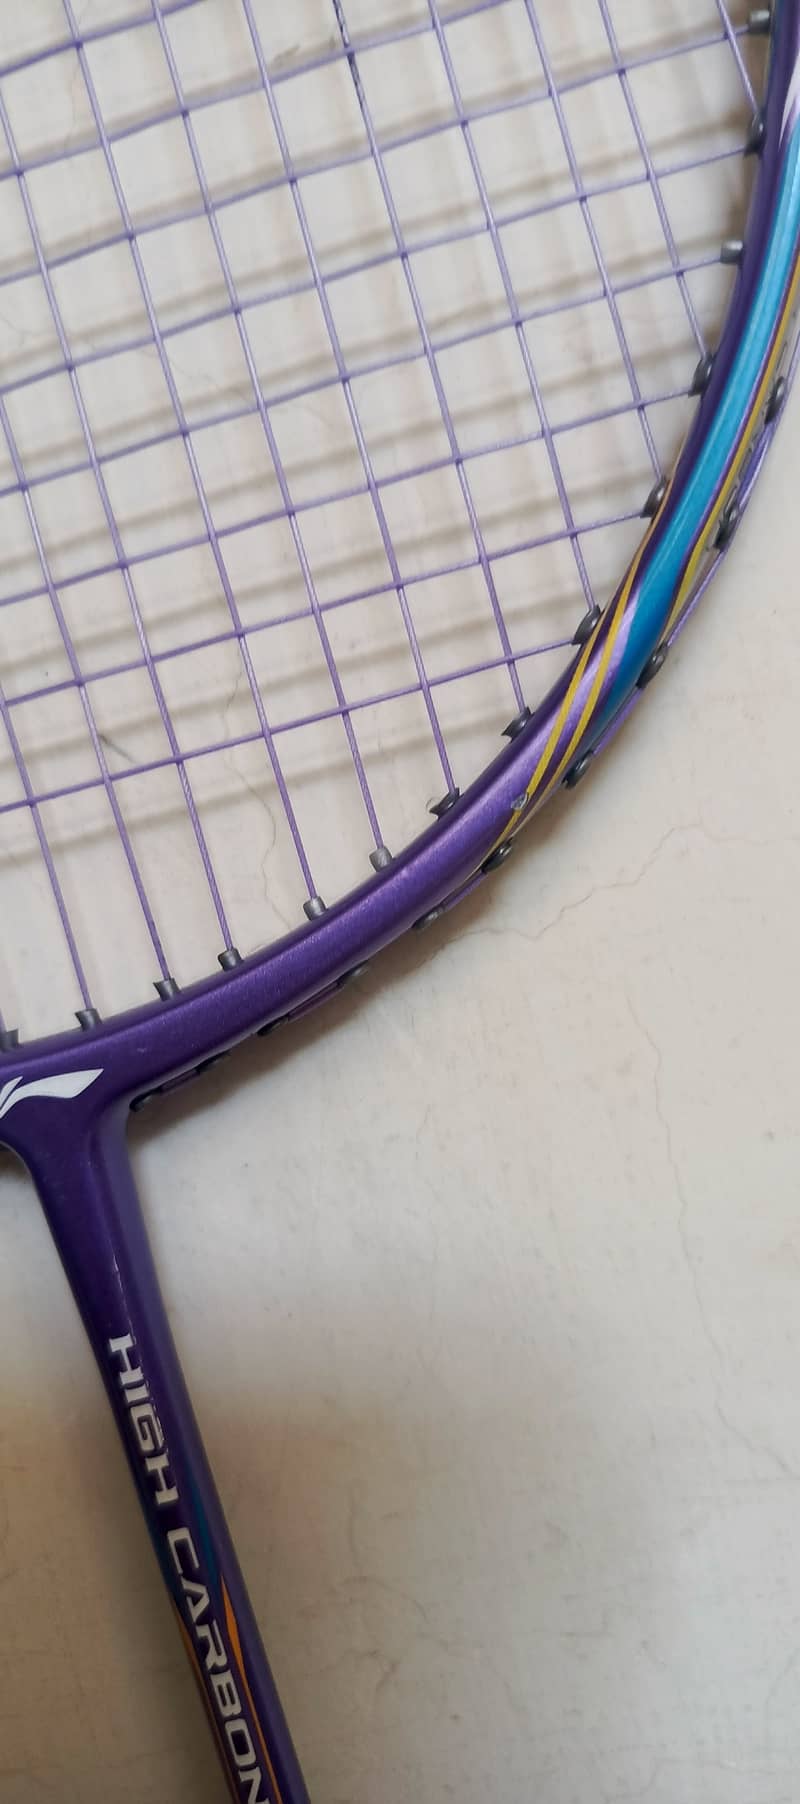 LI-NING HC 1900 Purple | Badminton Racket | Carbon Frame racket 6